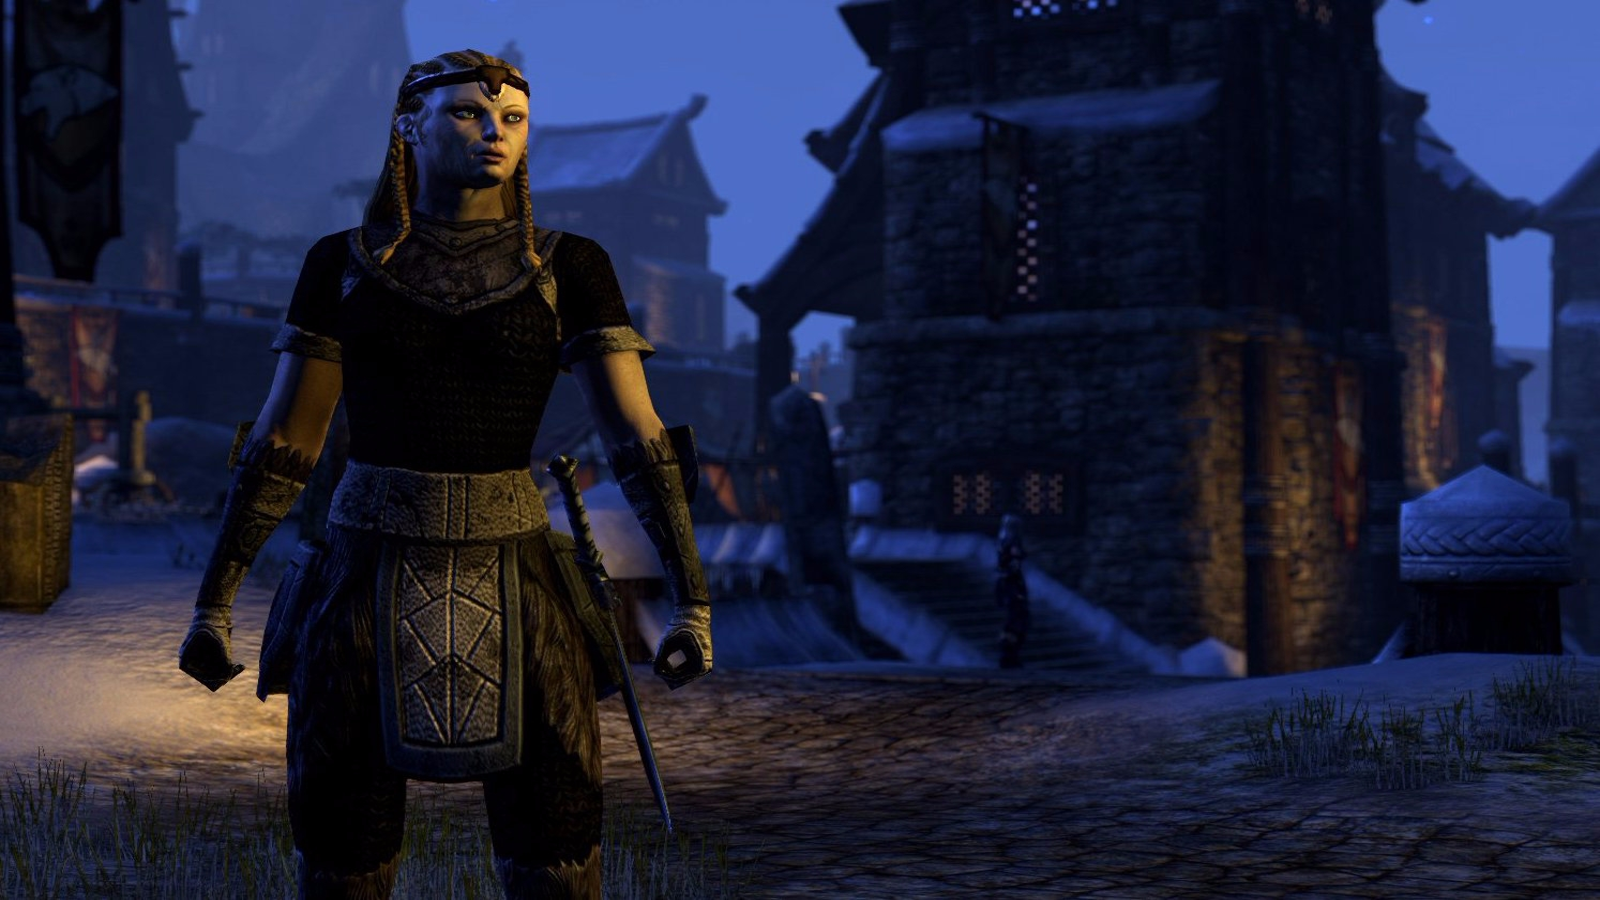 The Elder Scrolls Online: Tamriel Unlimited, PC Gameplay, 1080p HD